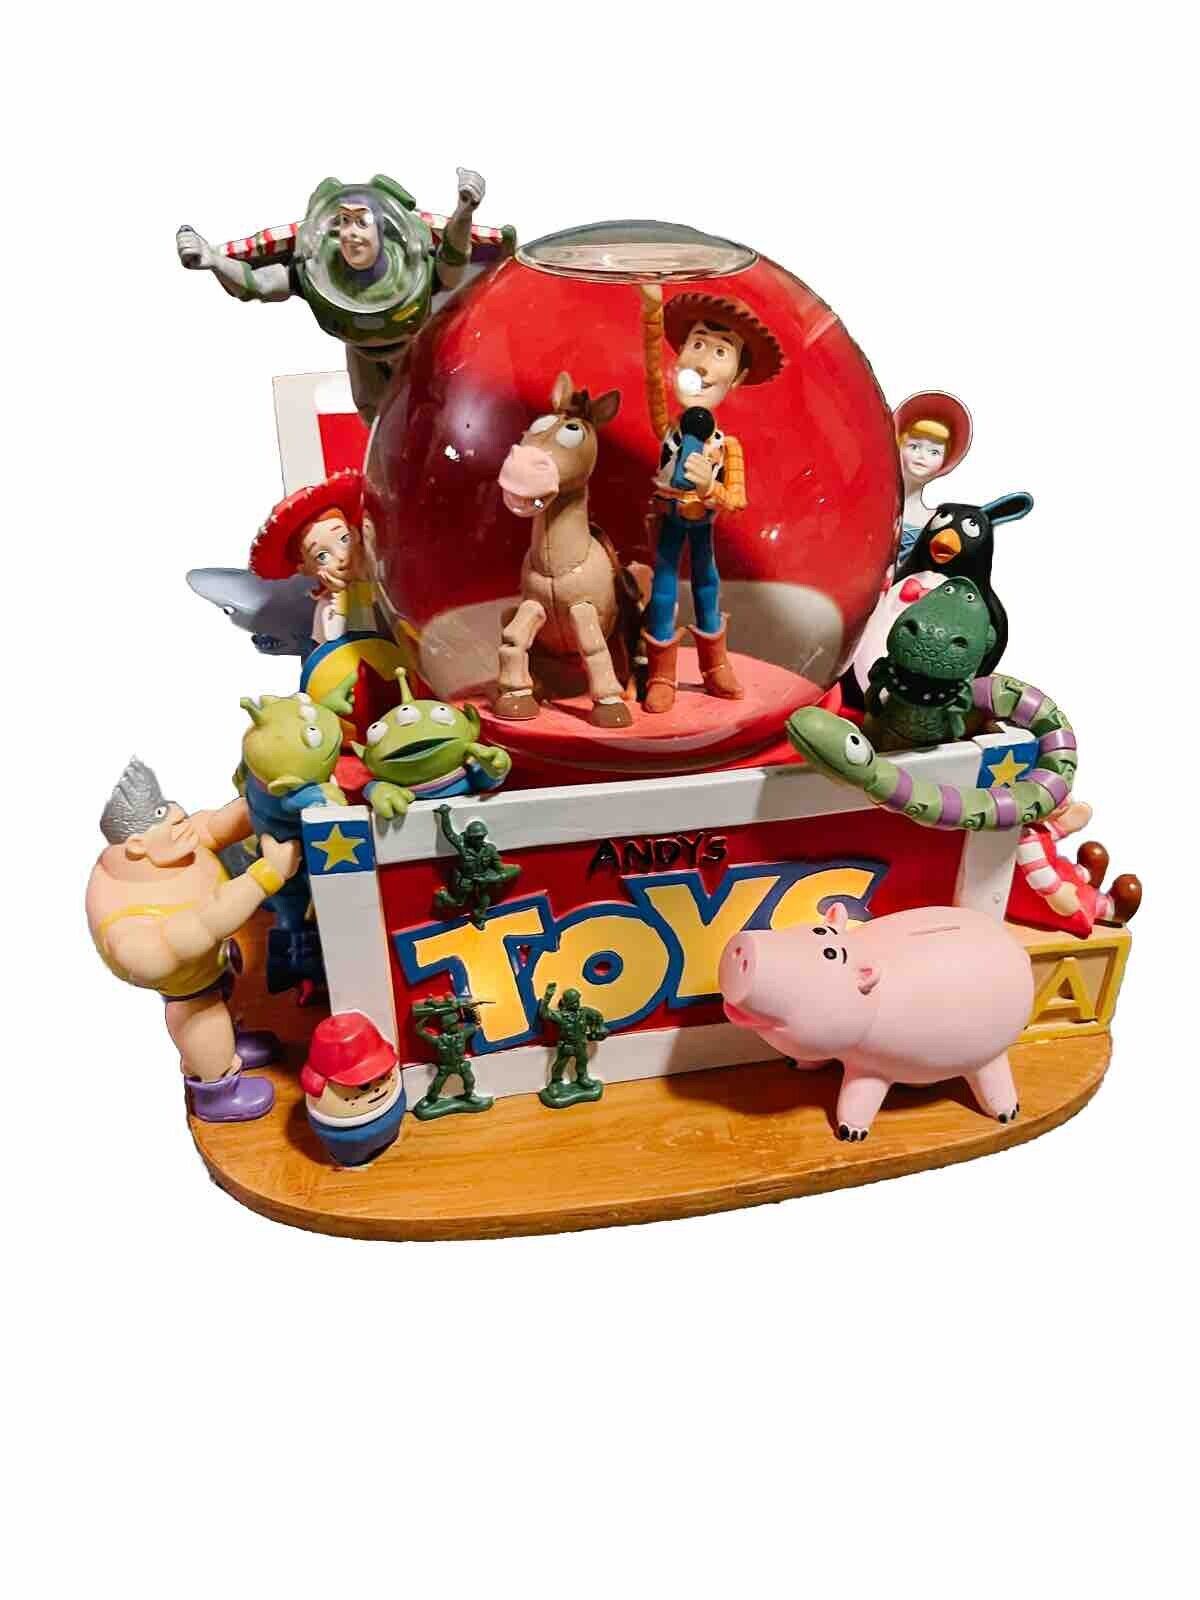 Toy Story Snow Globe Music Box Rare Andy’s Toy Box Disney Snow Globe